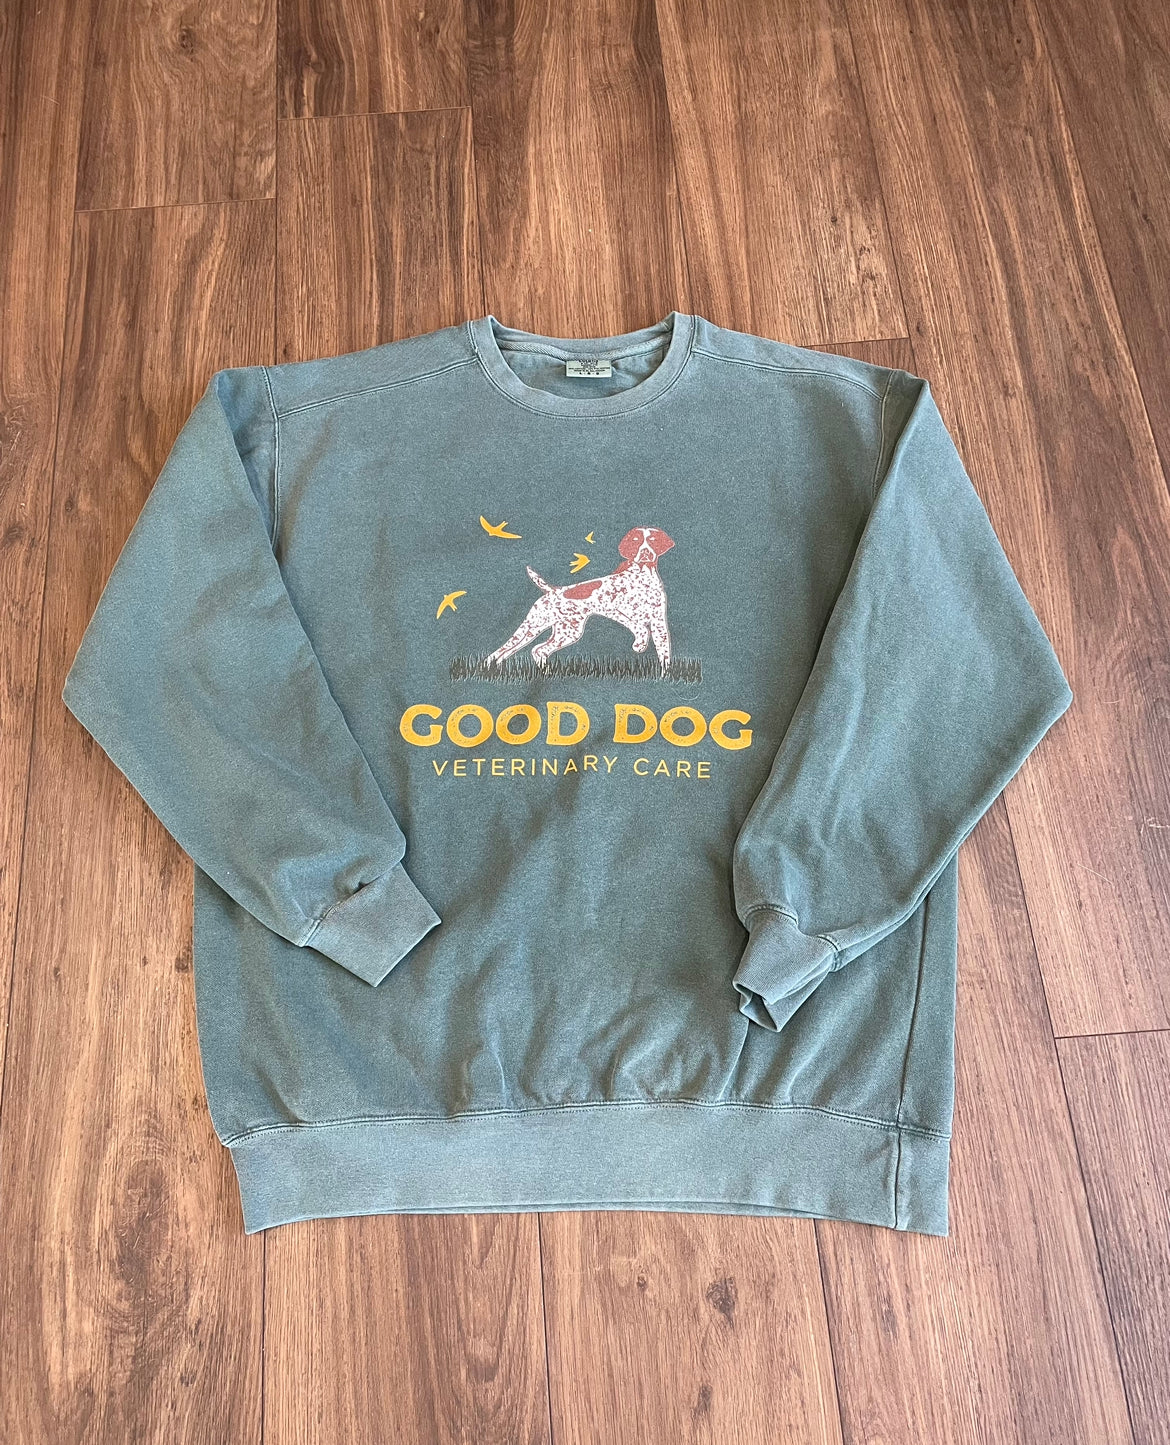 Good Dog Veterinary Care Sweatshirt - Spruce